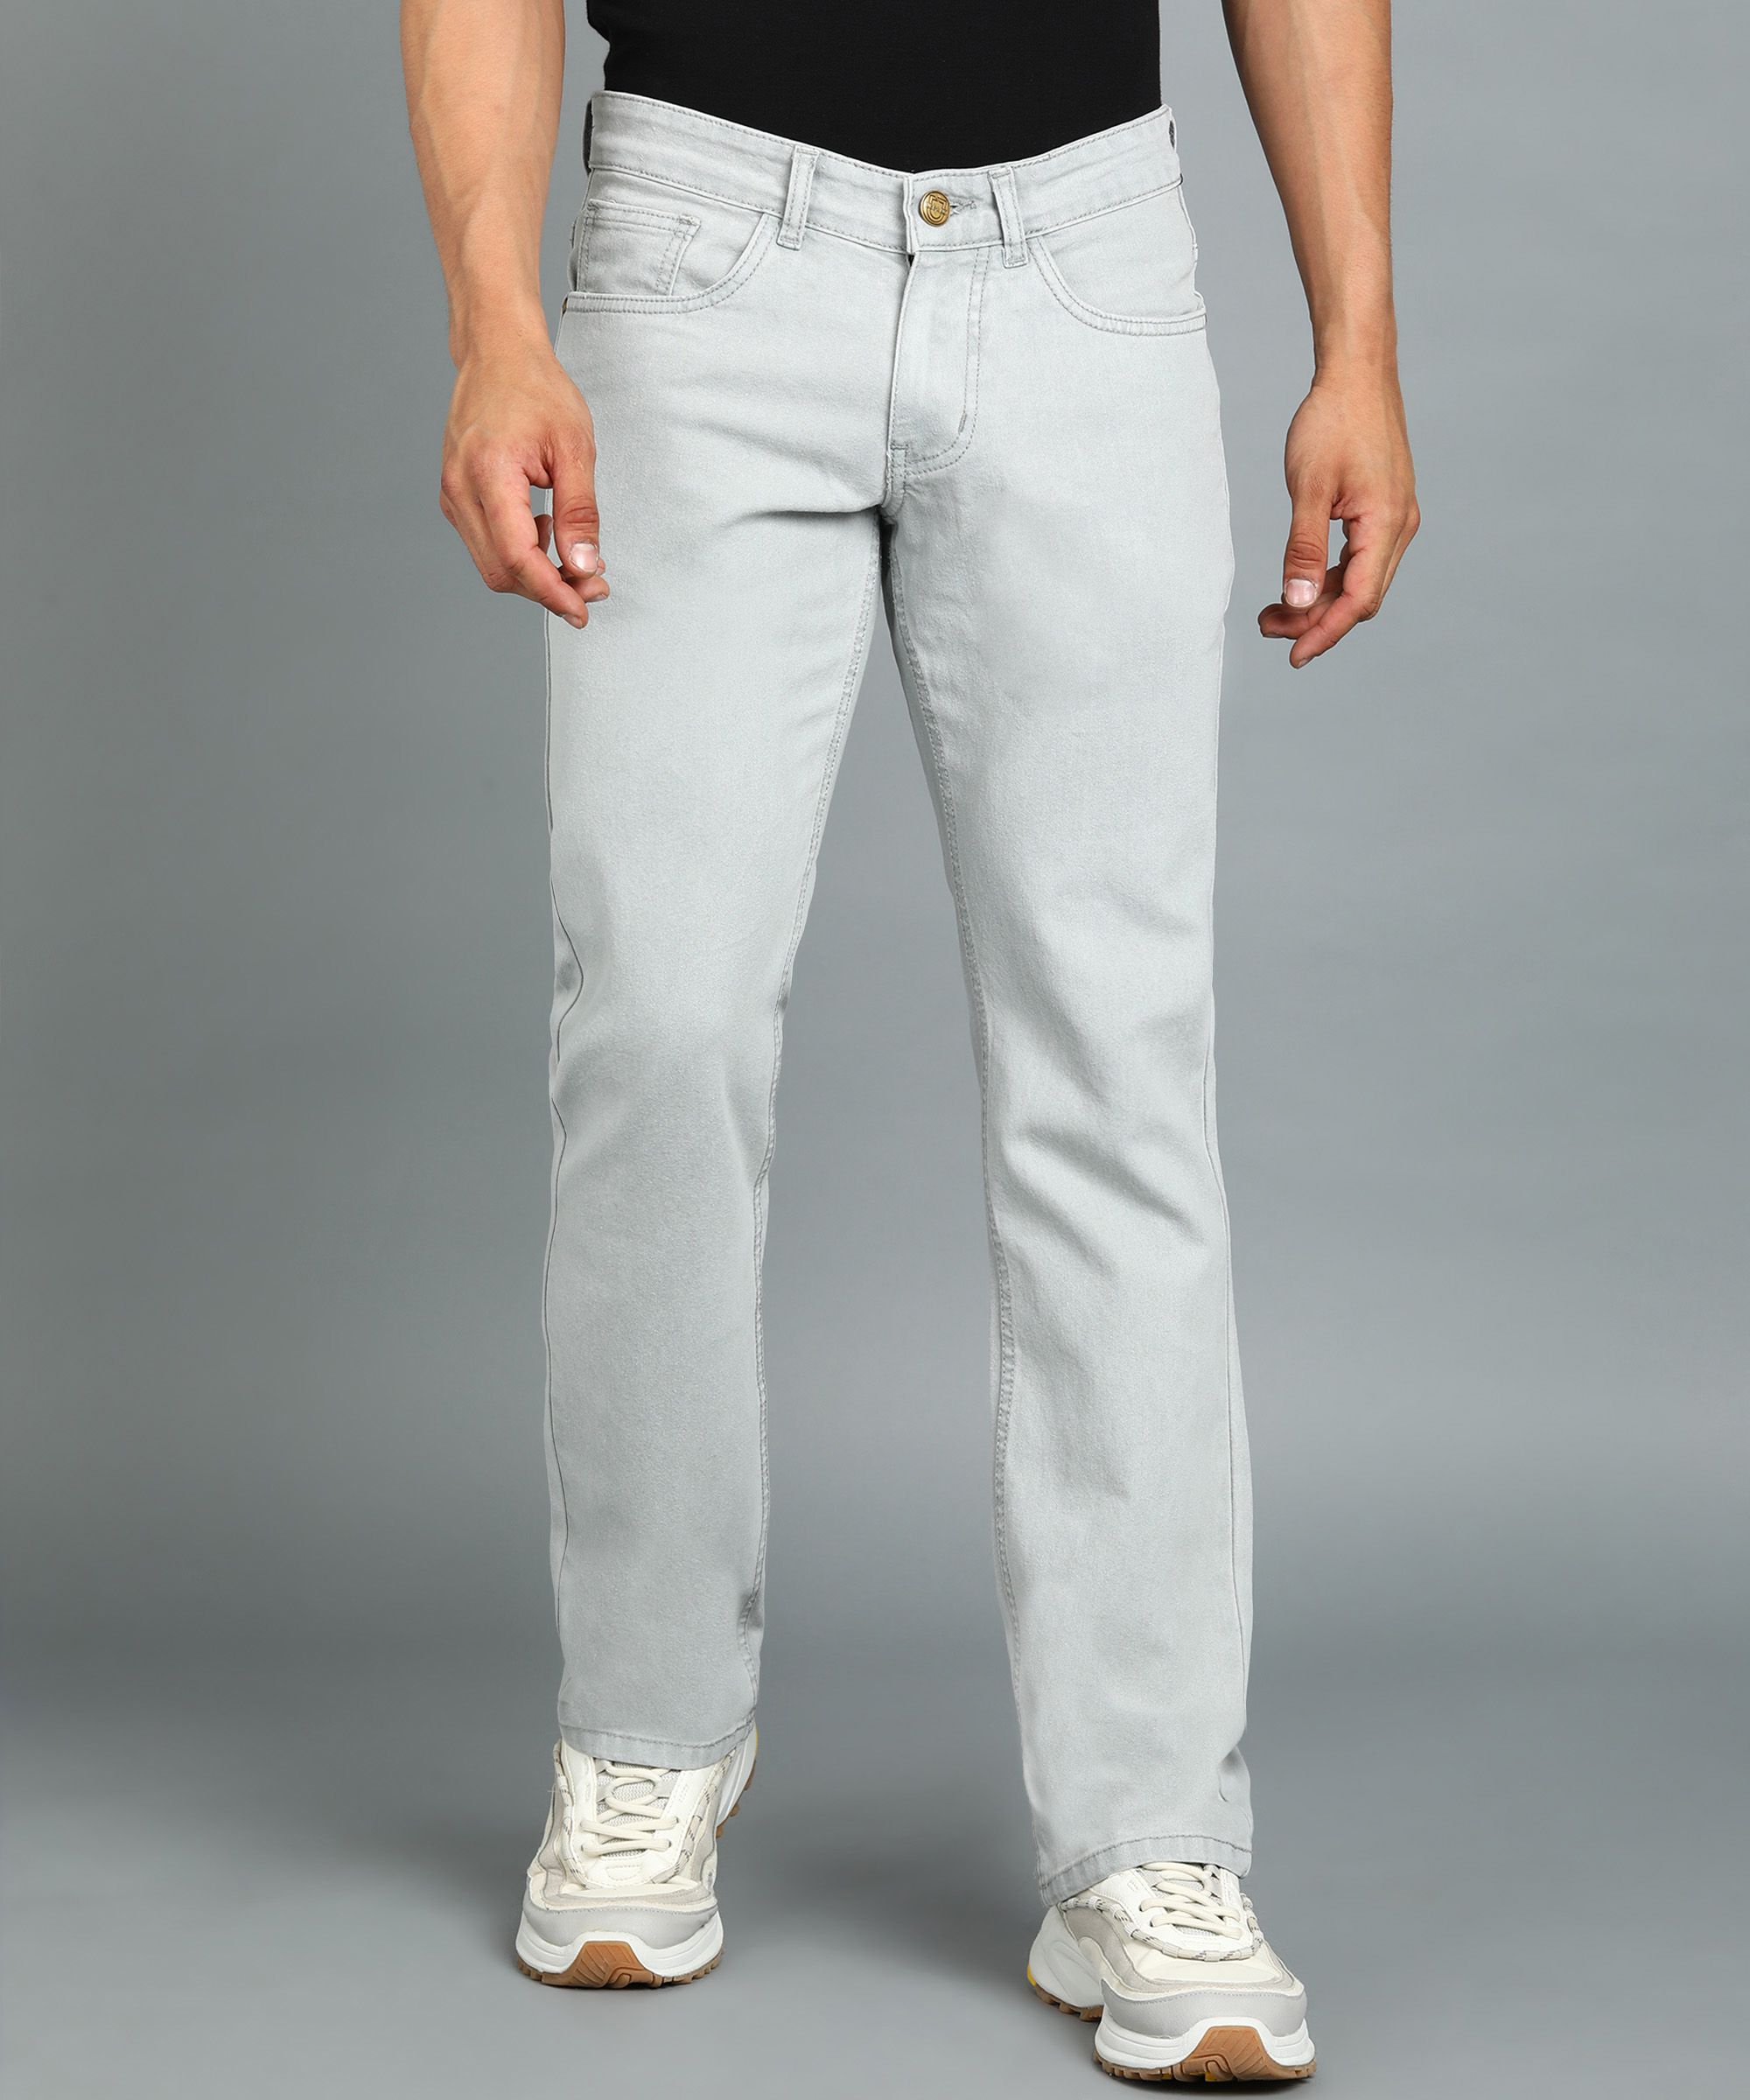     			Urbano Fashion Regular Fit Basic Men's Jeans - Grey Melange ( Pack of 1 )